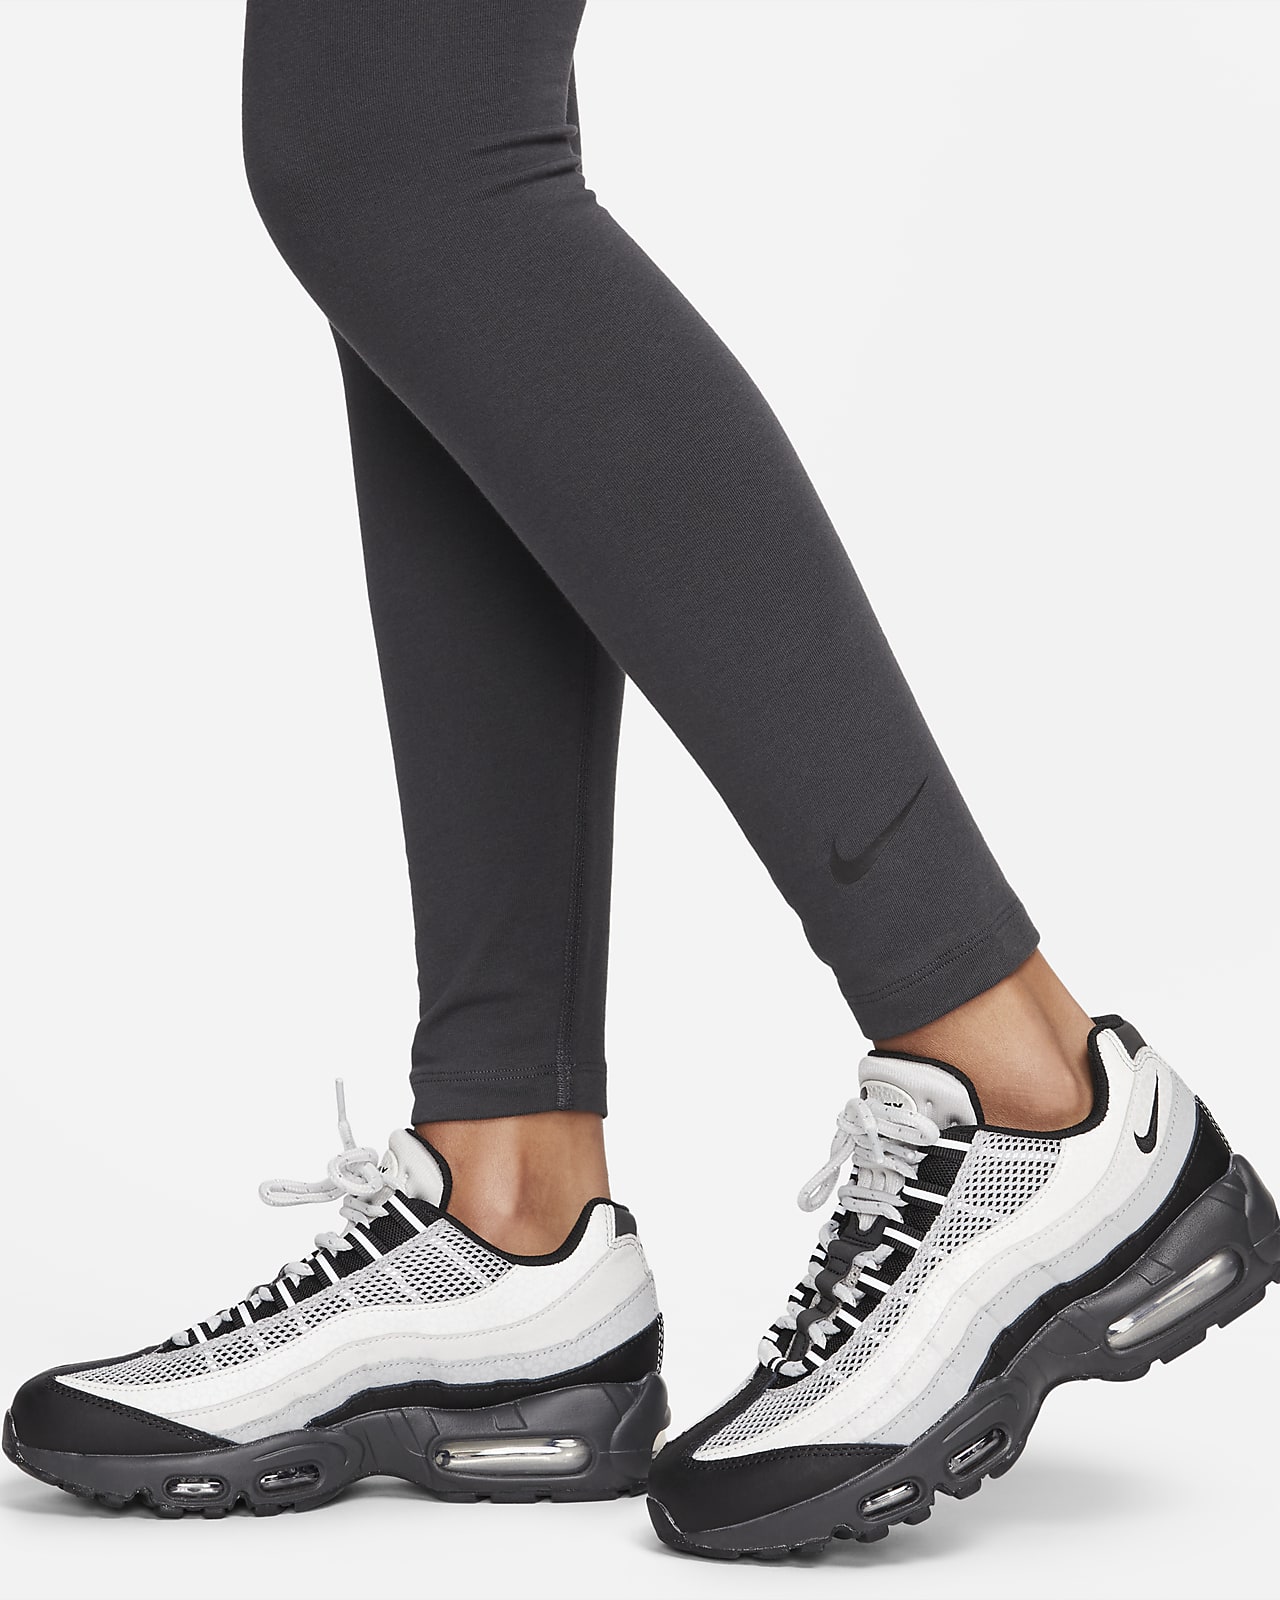 Nike Sportswear Club Women\'s High-Waisted Leggings. | Sport-Leggings